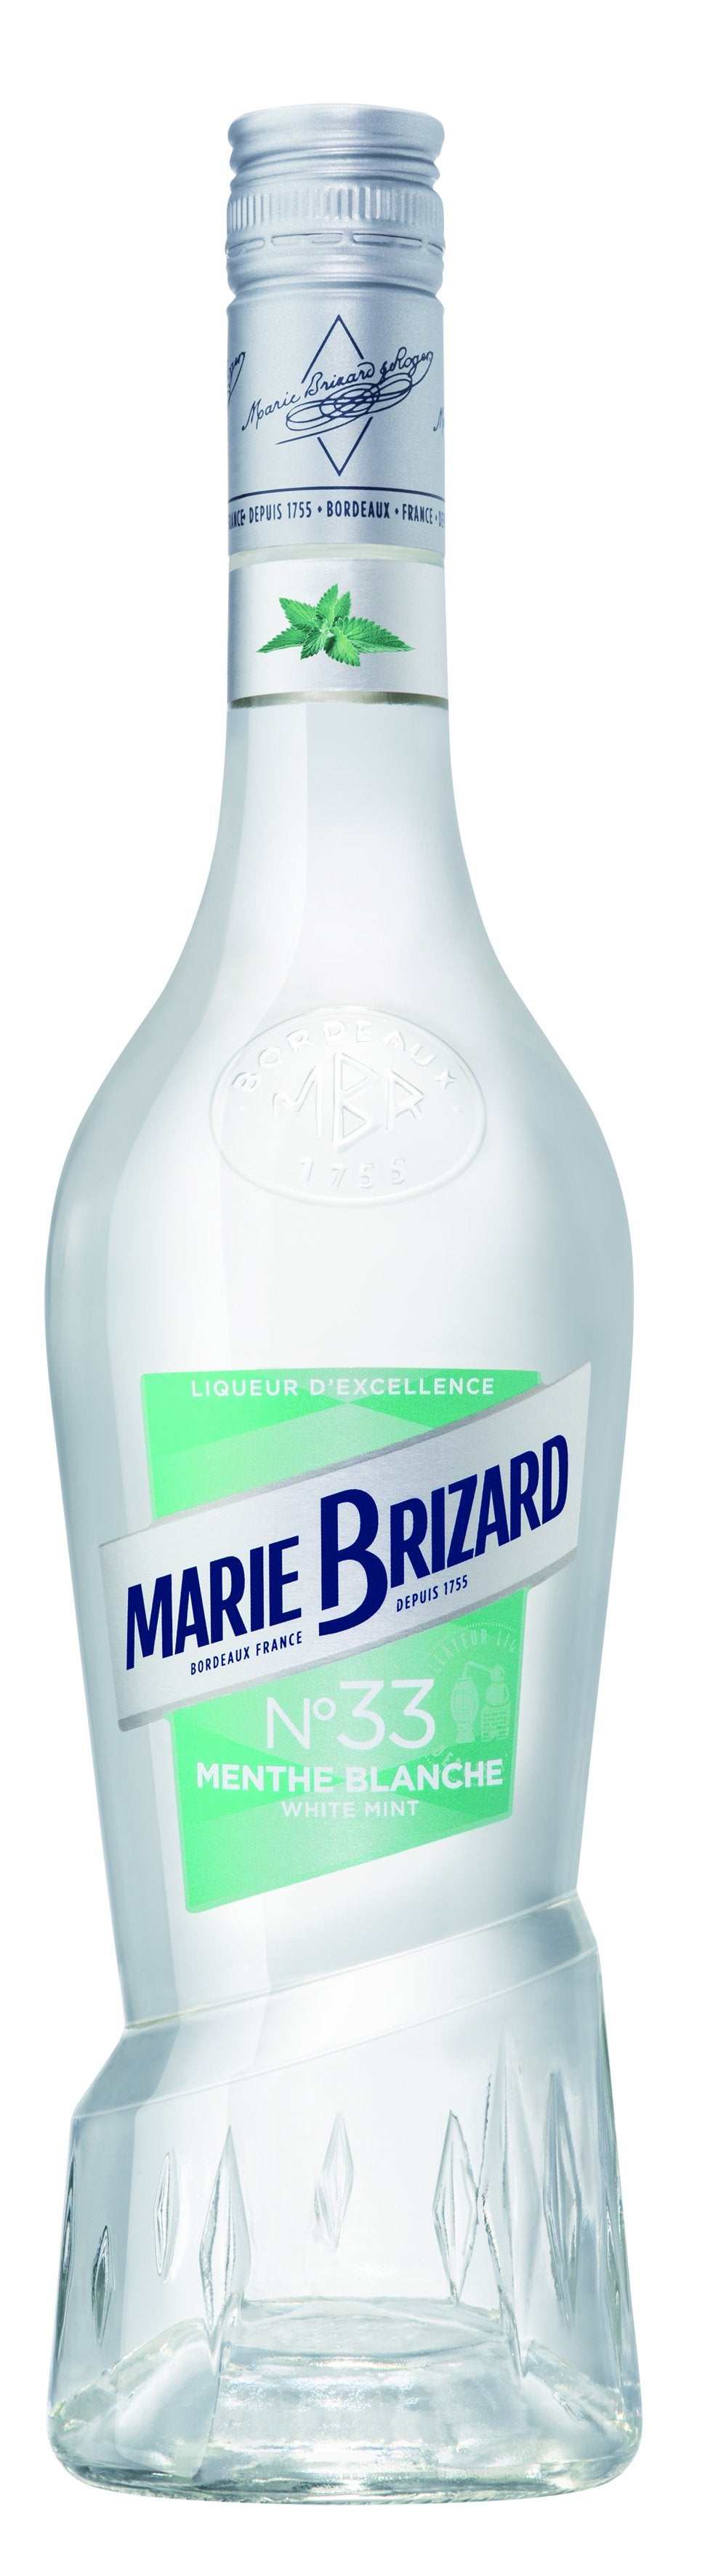 Marie Brizard - Creme de Menthe (White) - Colonial Wine & Spirits